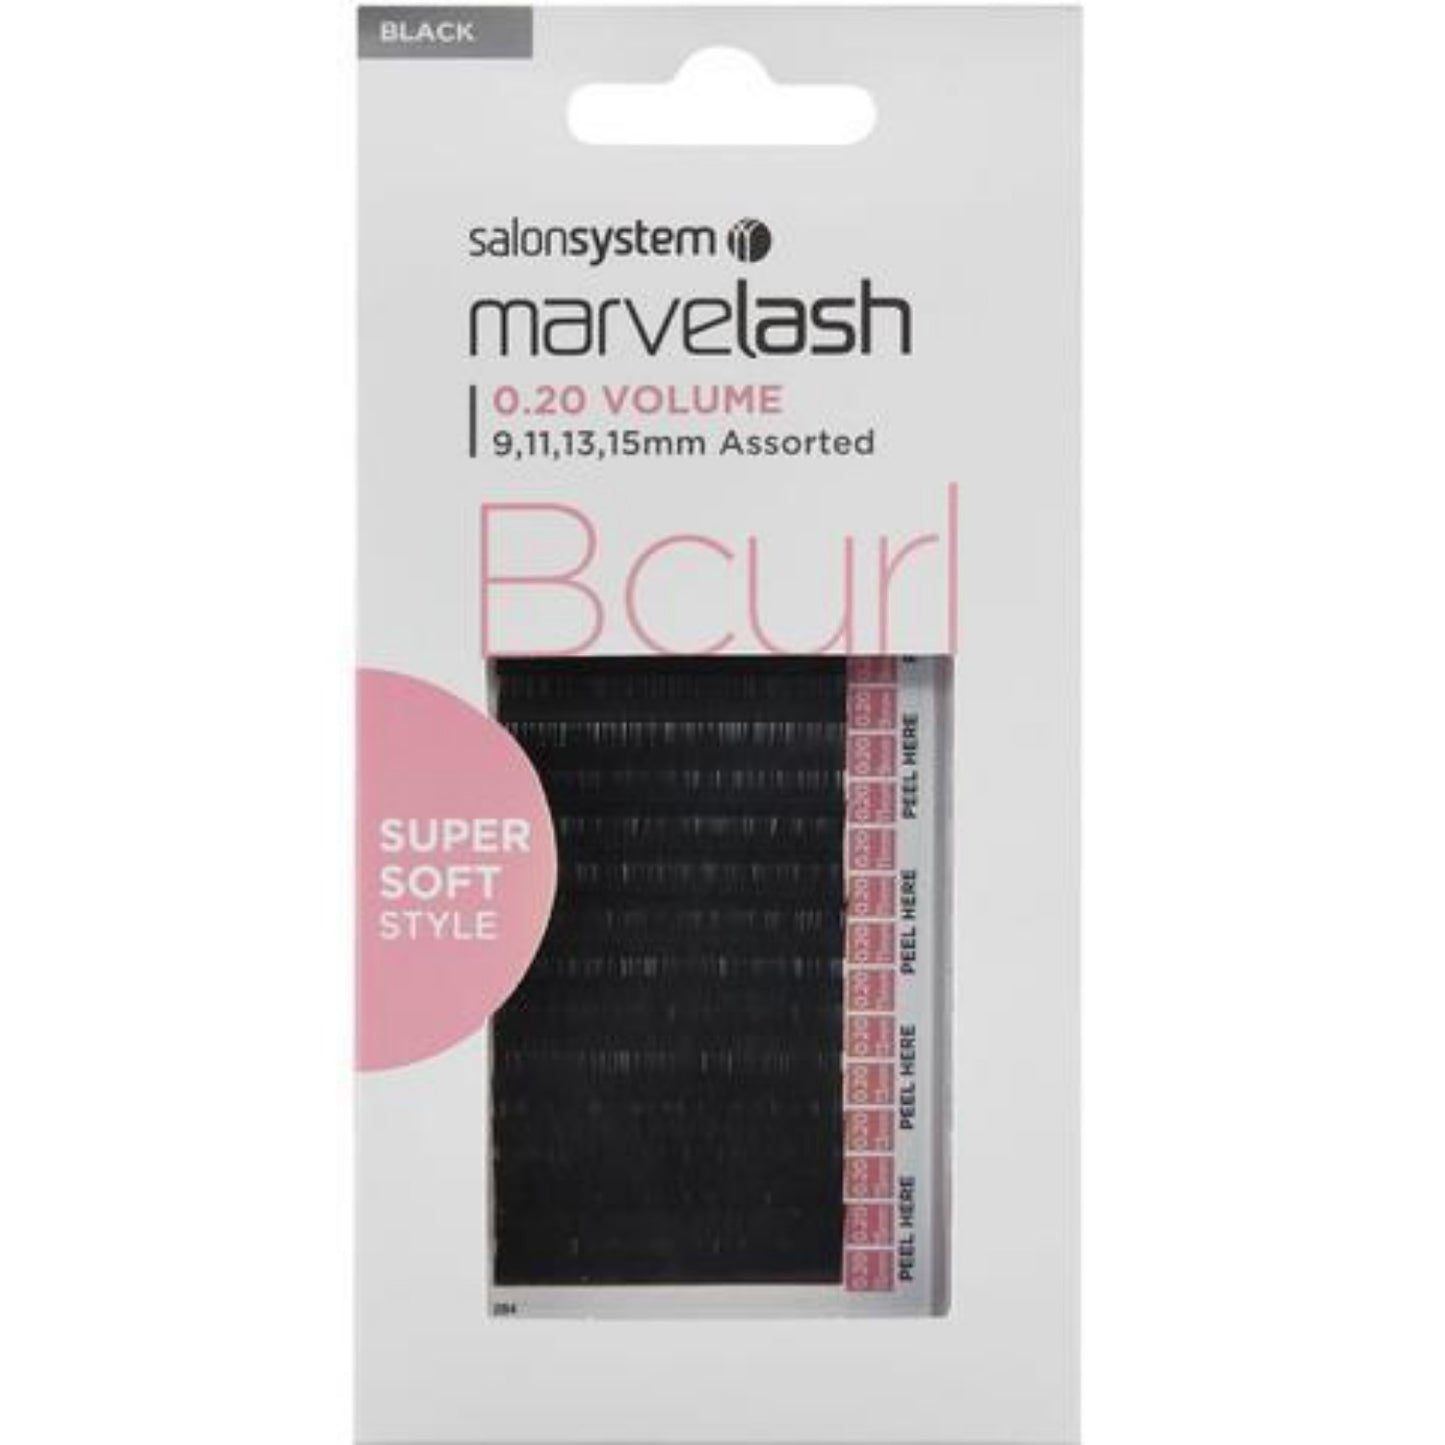 Salon System Marvelash B Curl Lashes 0.20 Volume Mink Style, Assorted Length (9, 11, 13, 15mm) False Strip Lashes